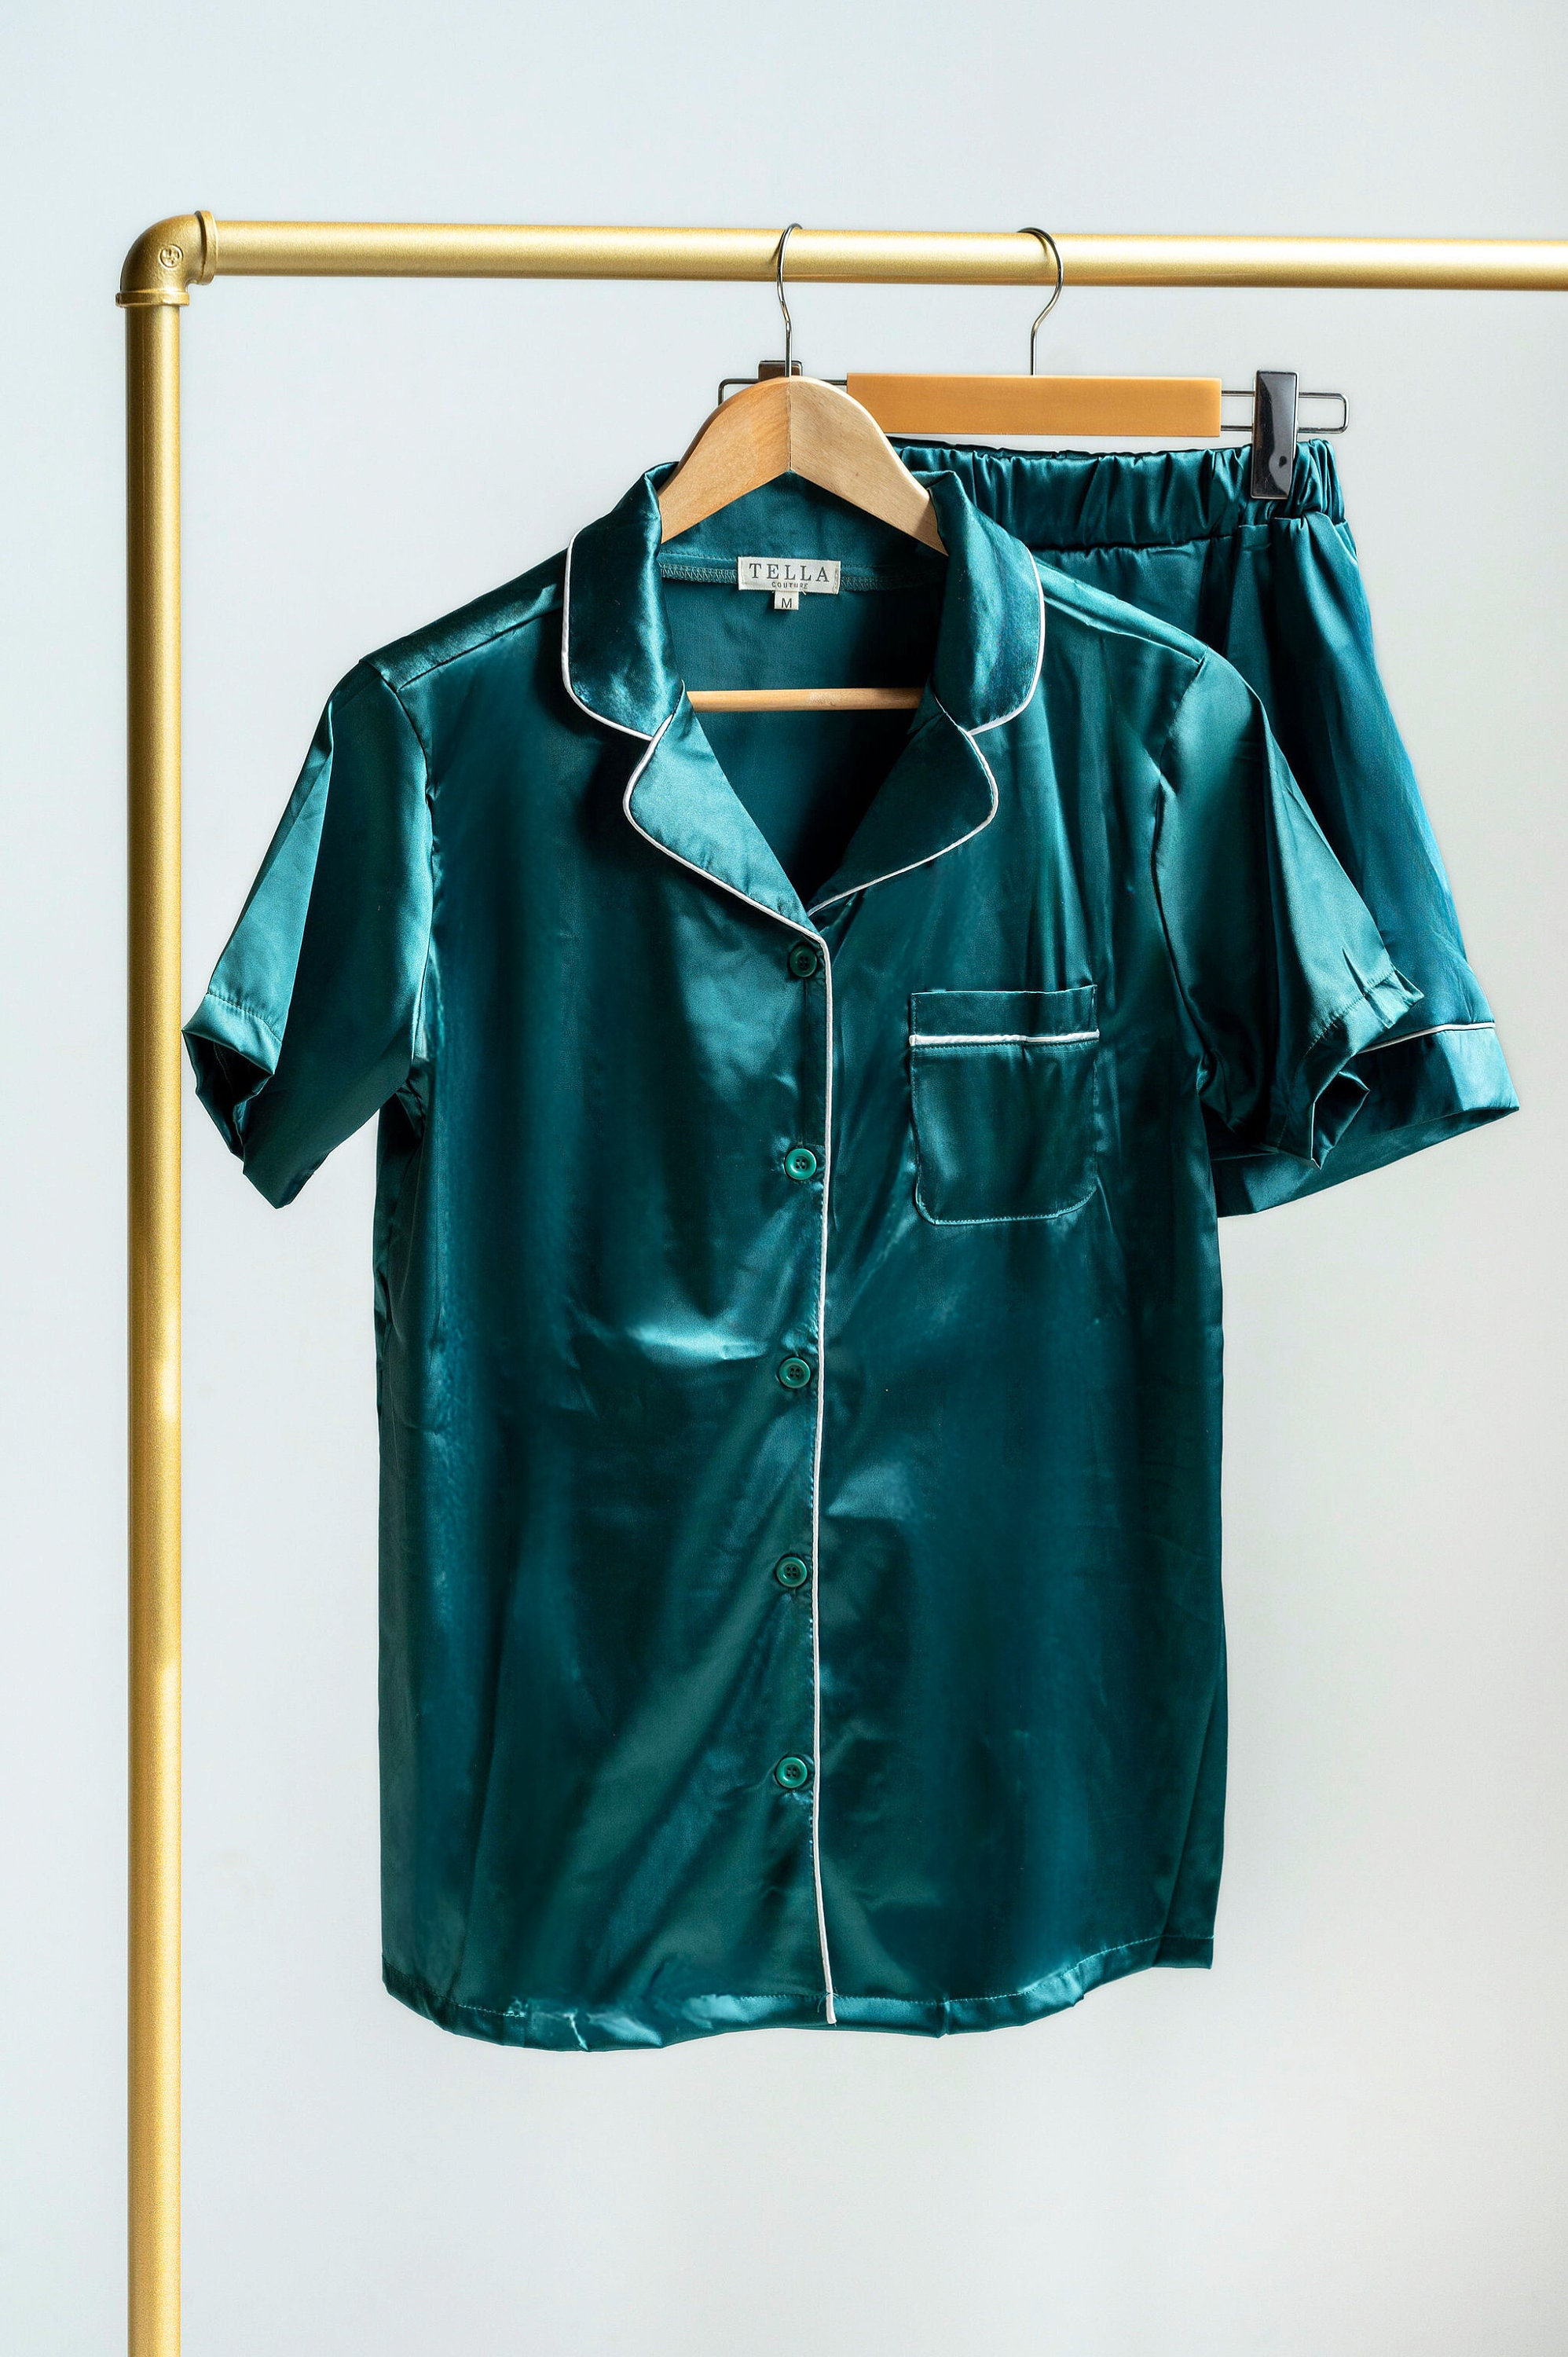 Emerald Green Silk Pyjama - Luxury PJ Jacket and Bottoms Set